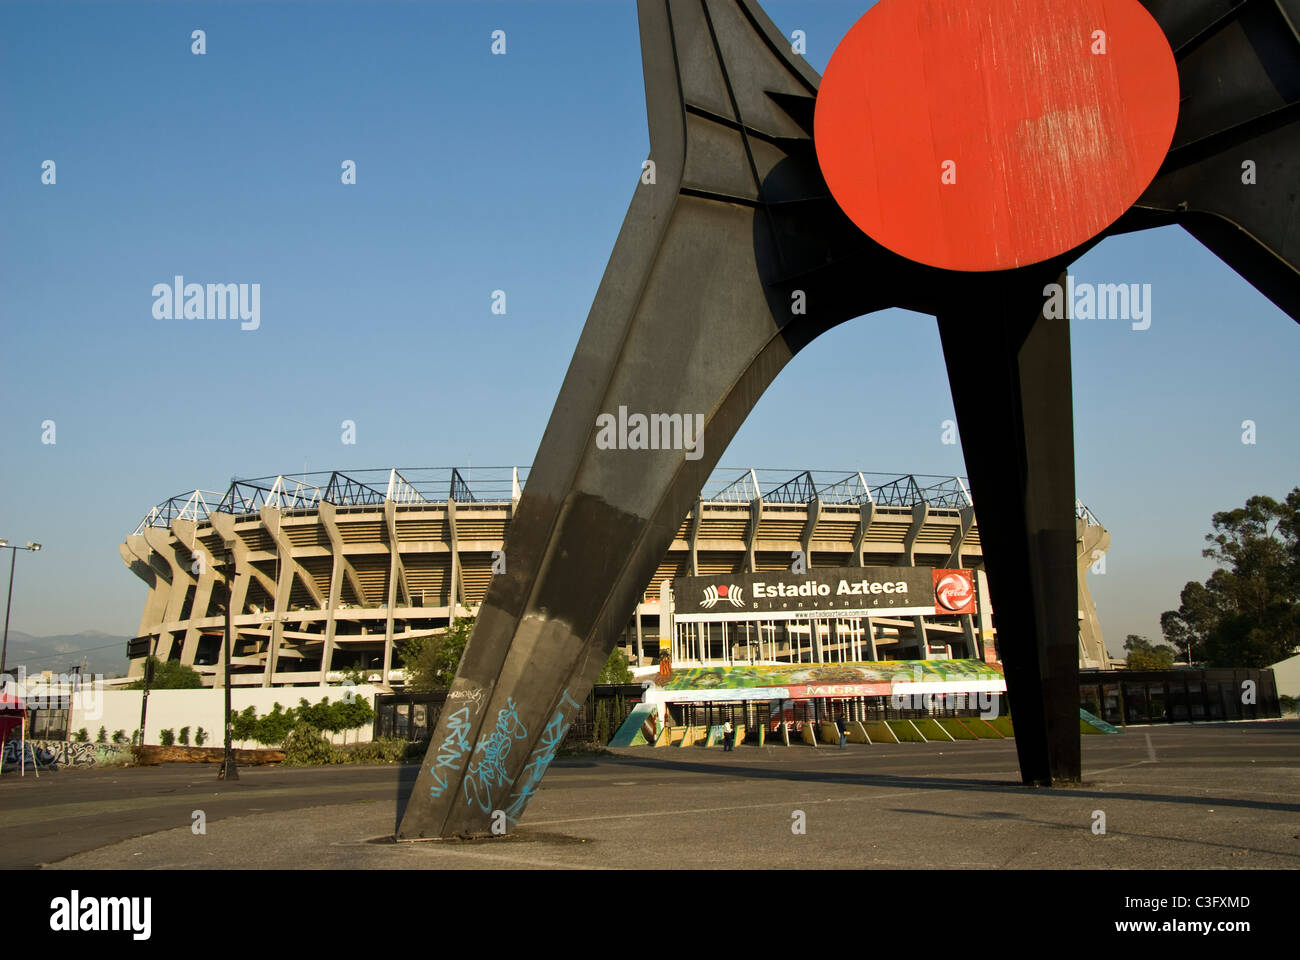 Mexico.Mexico city.Azteca stadium. Stock Photo